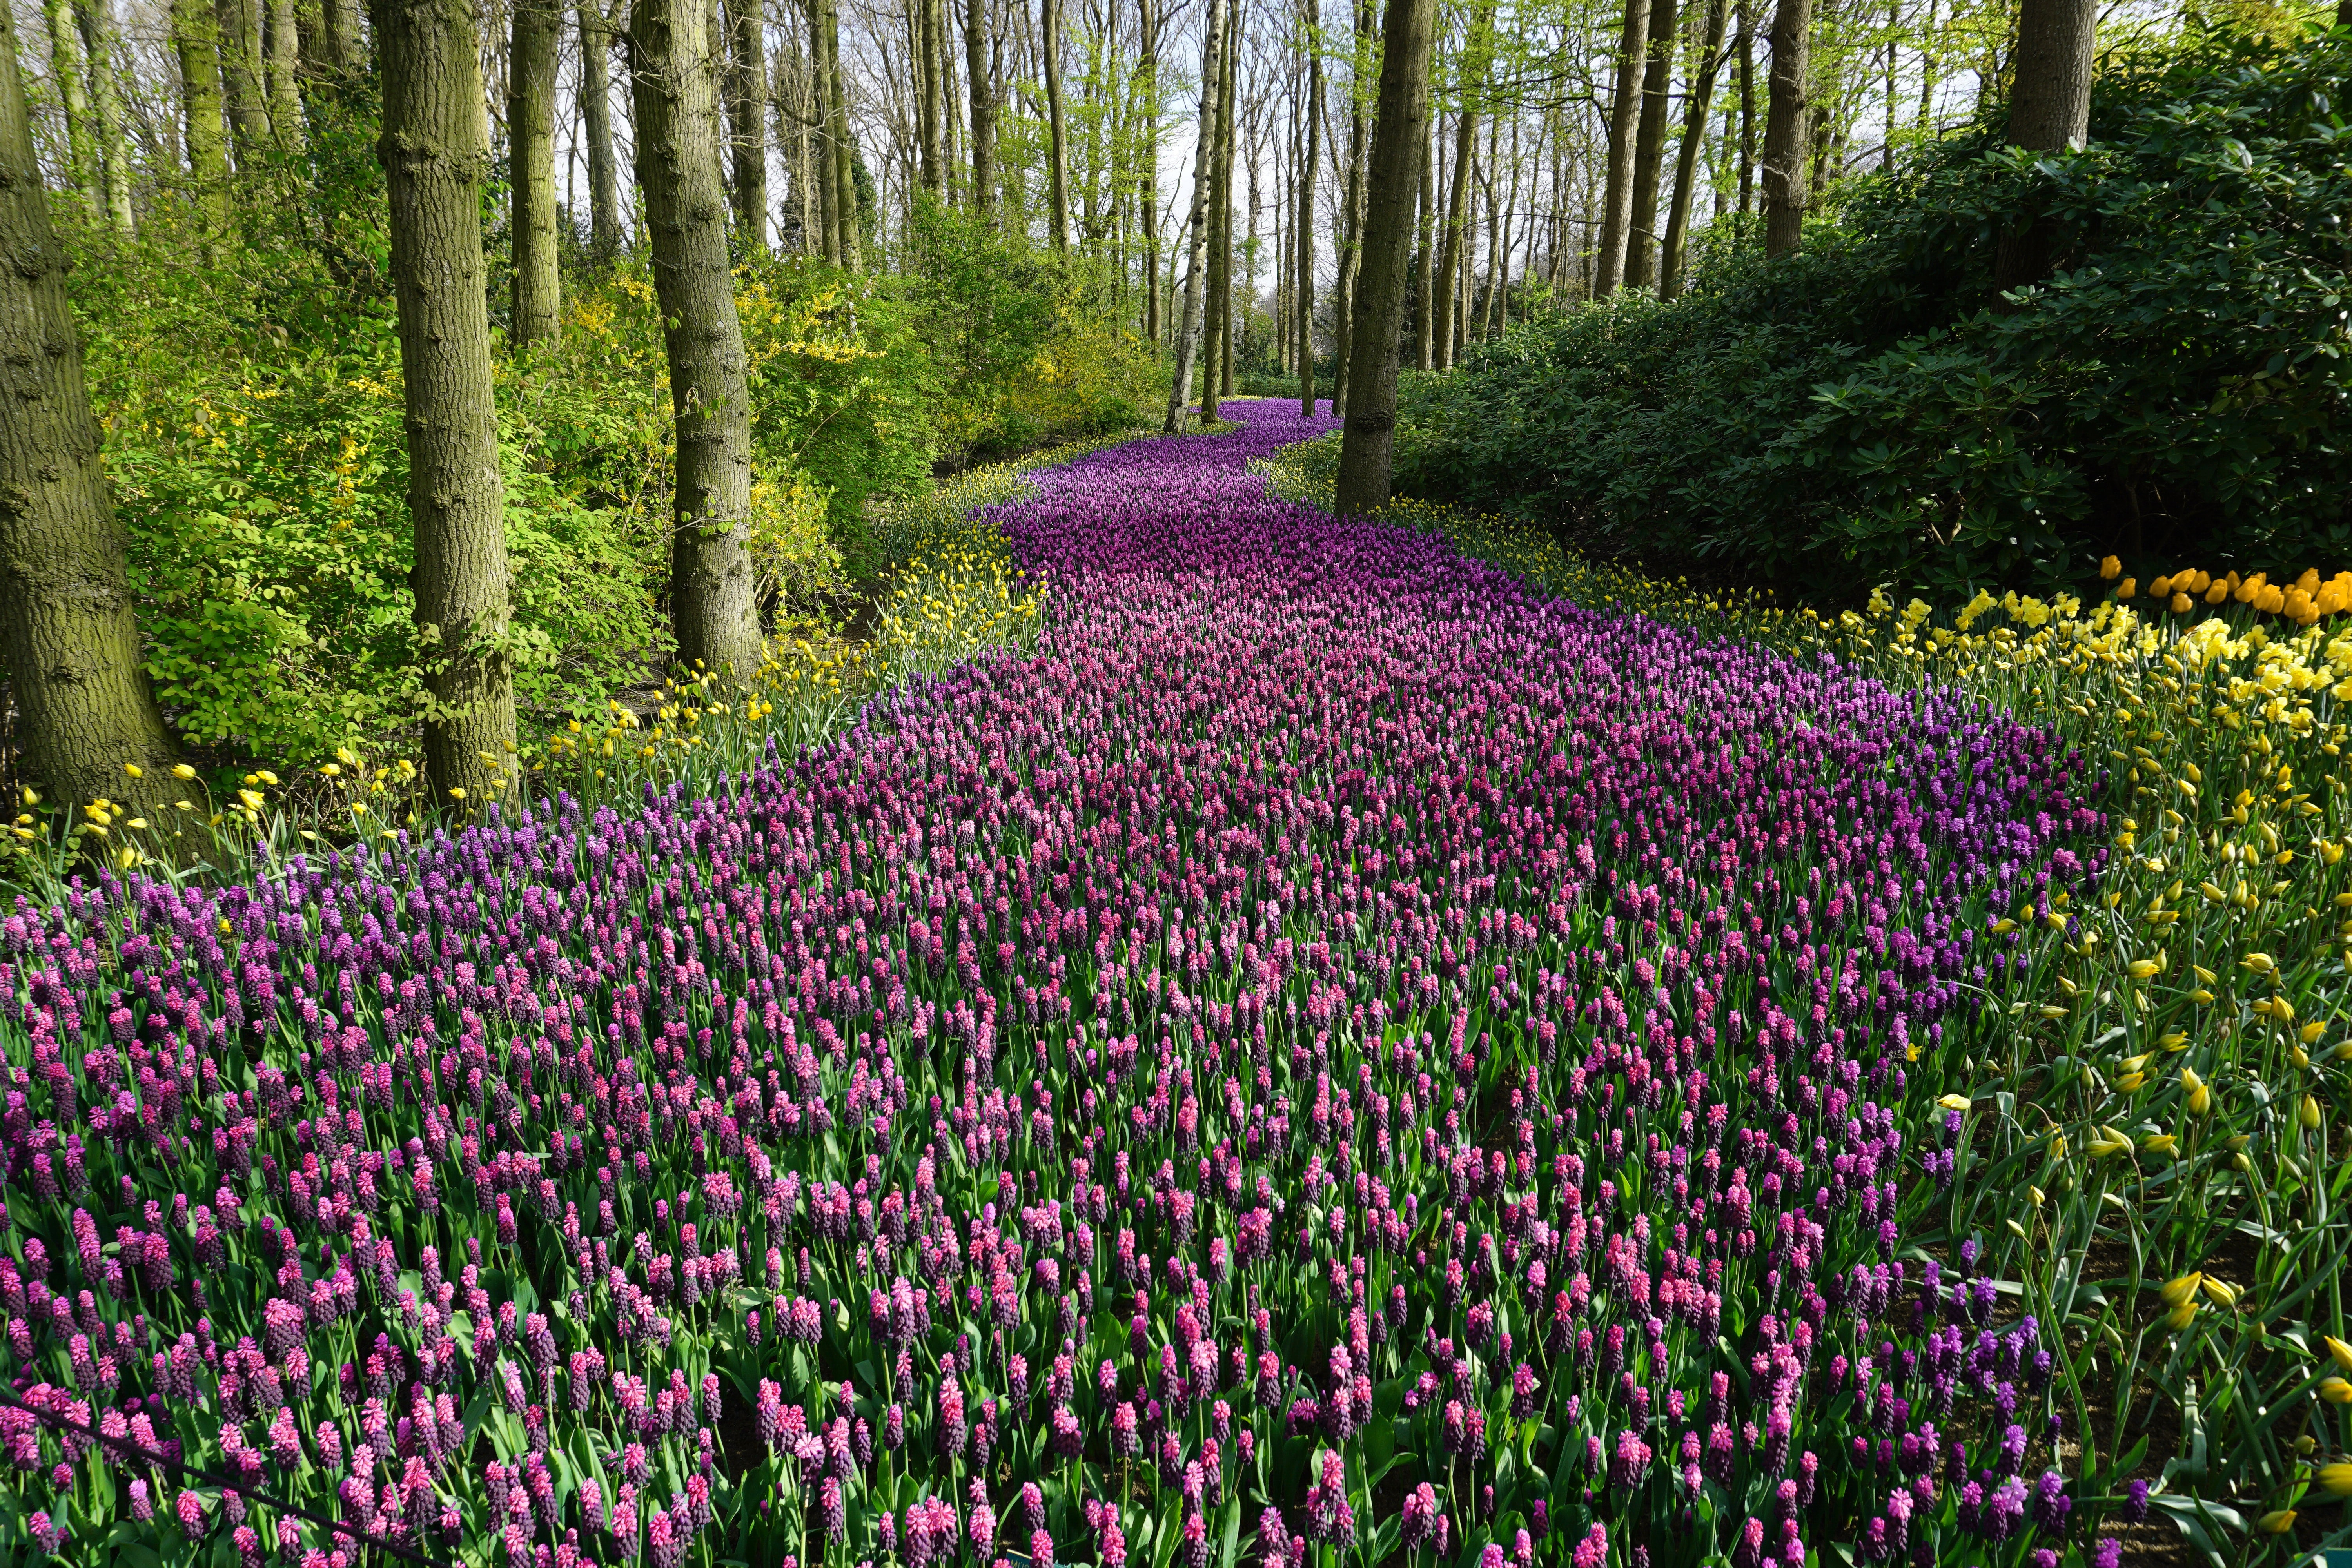 A vibrant field of purple flowers